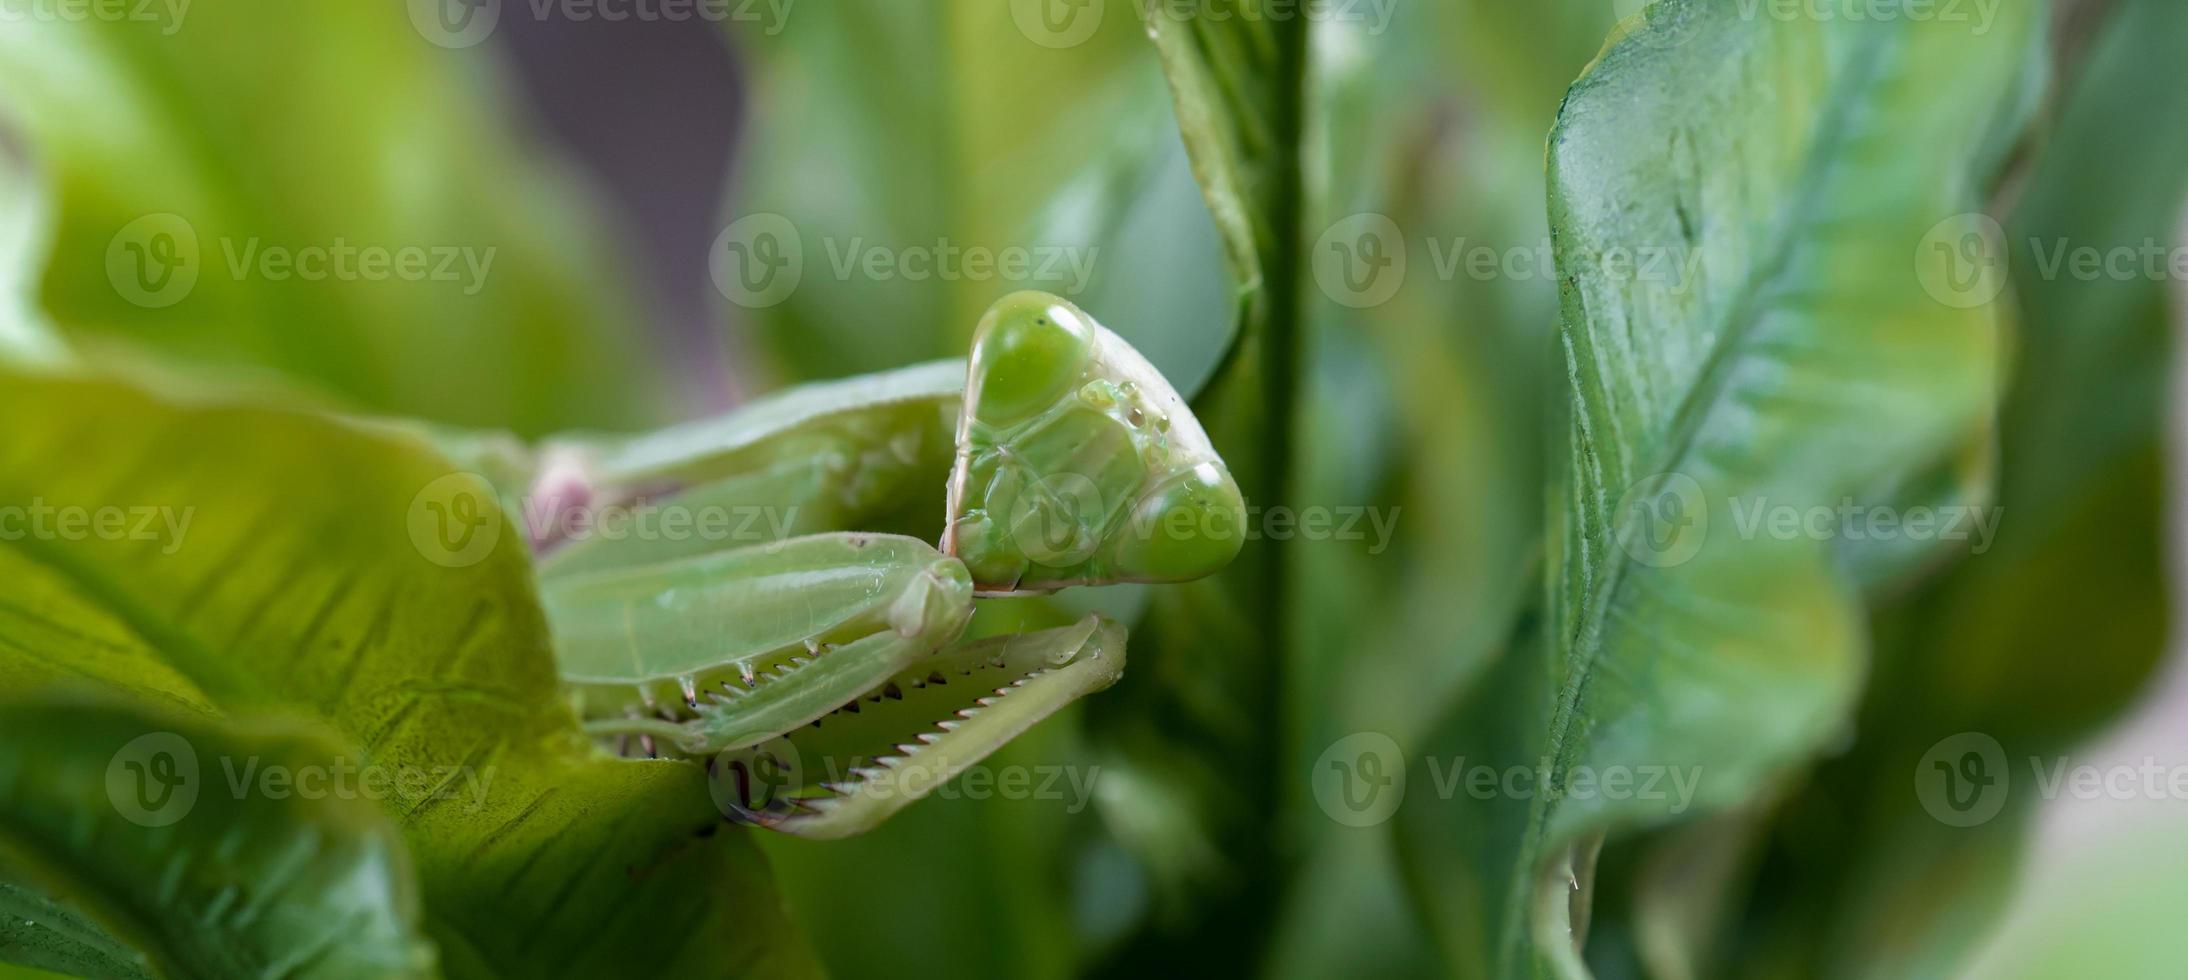 Mantis on the green leaf. African mantis, giant African mantis or bush mantis. photo